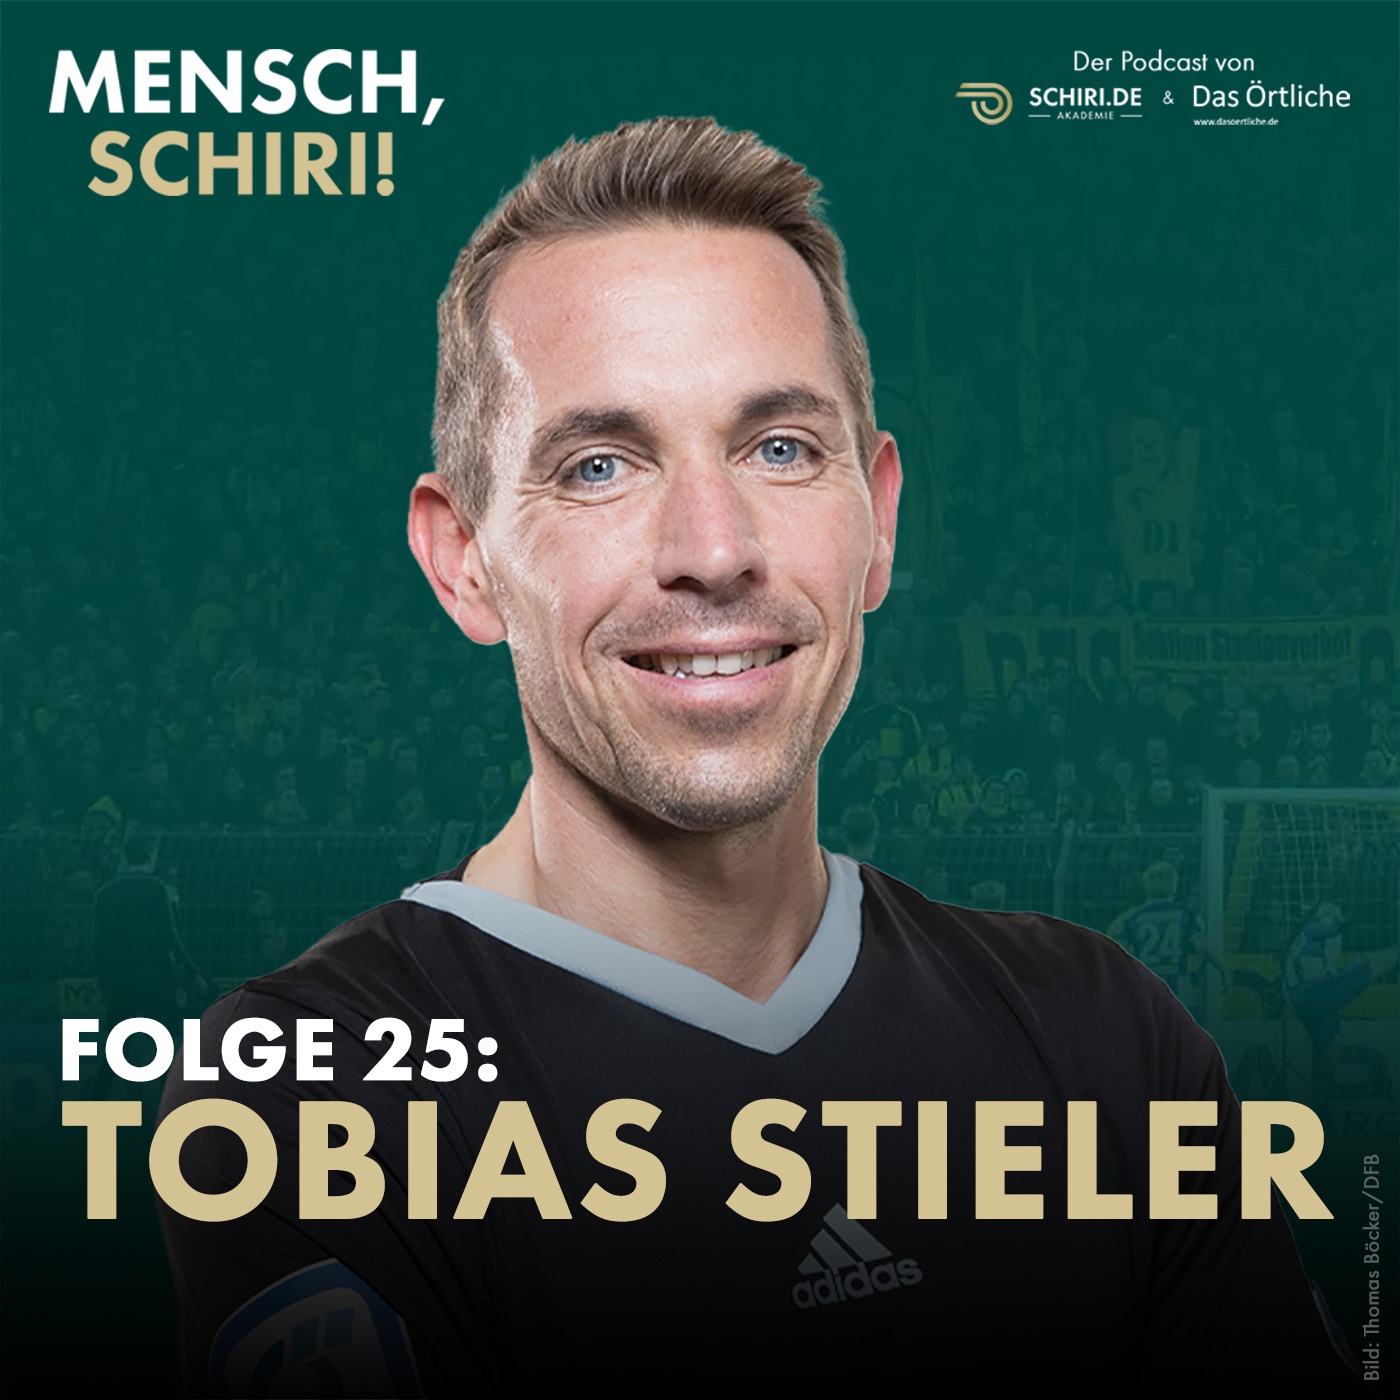 Tobias Stieler